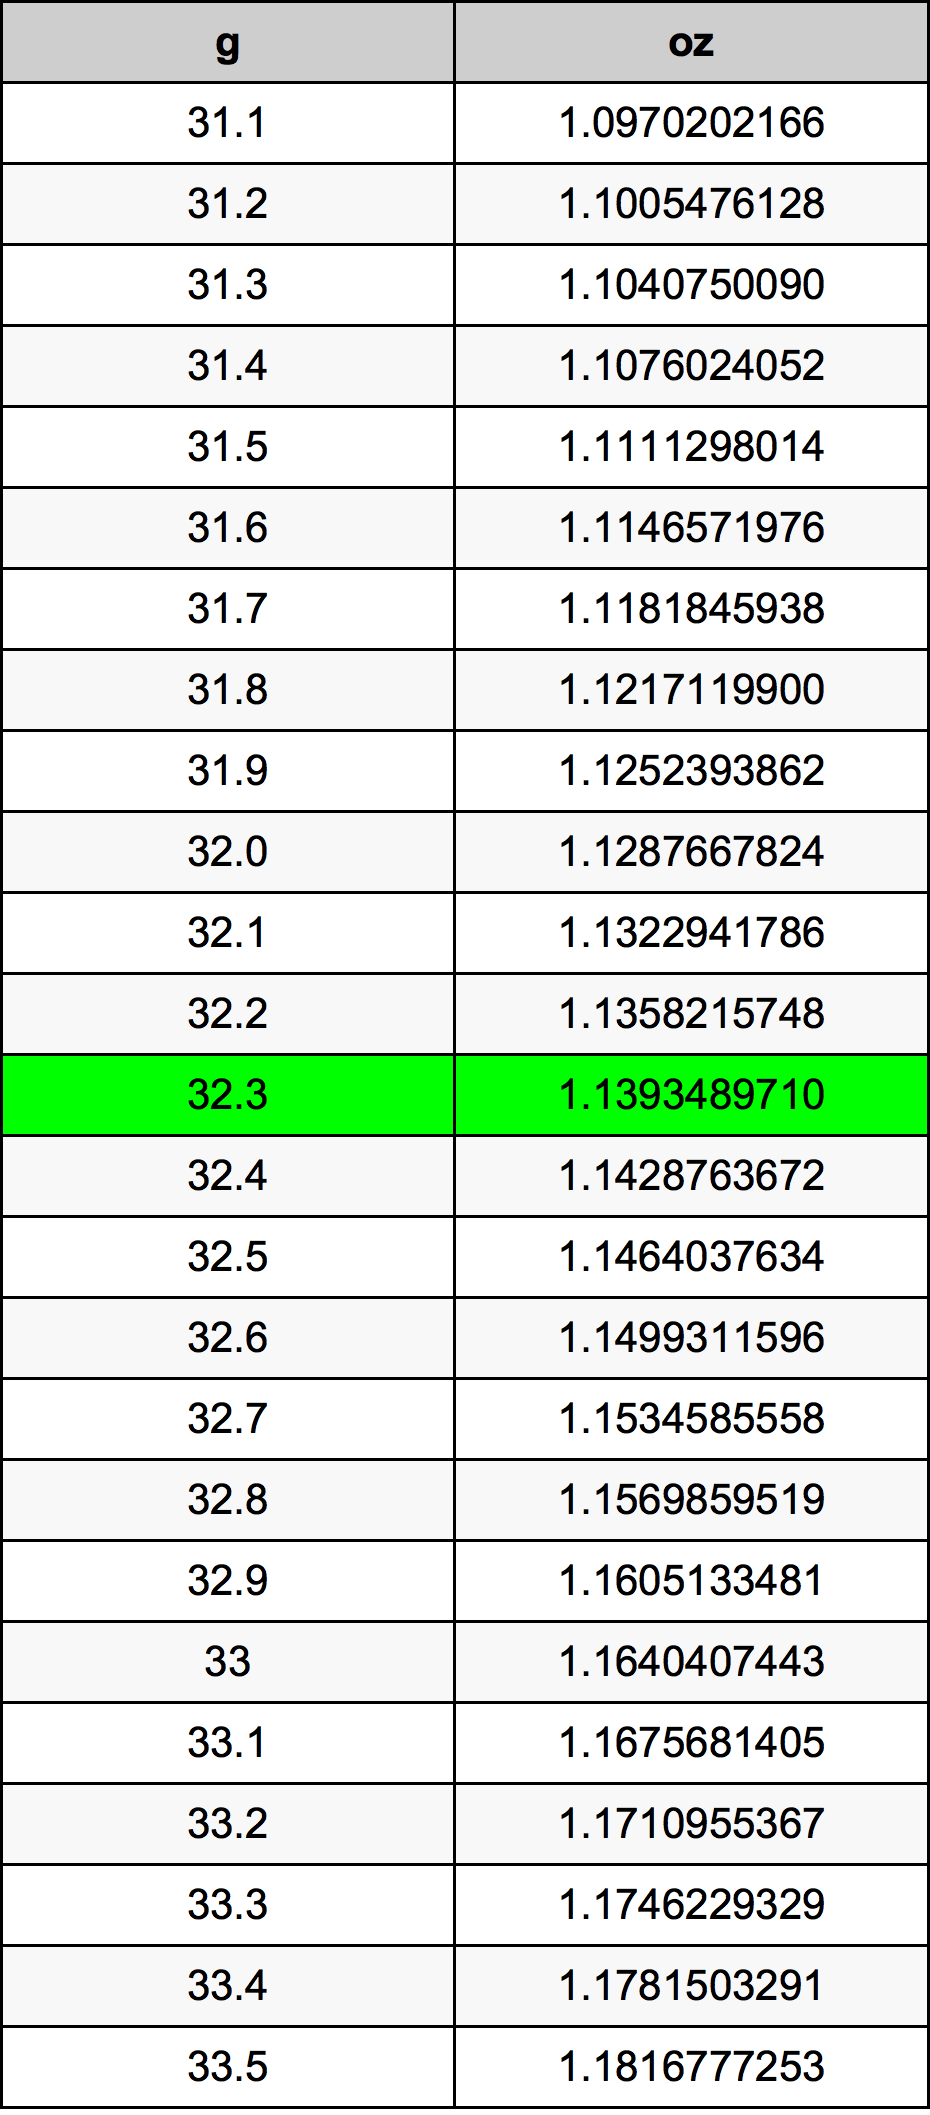 32.3 غرام جدول تحويل